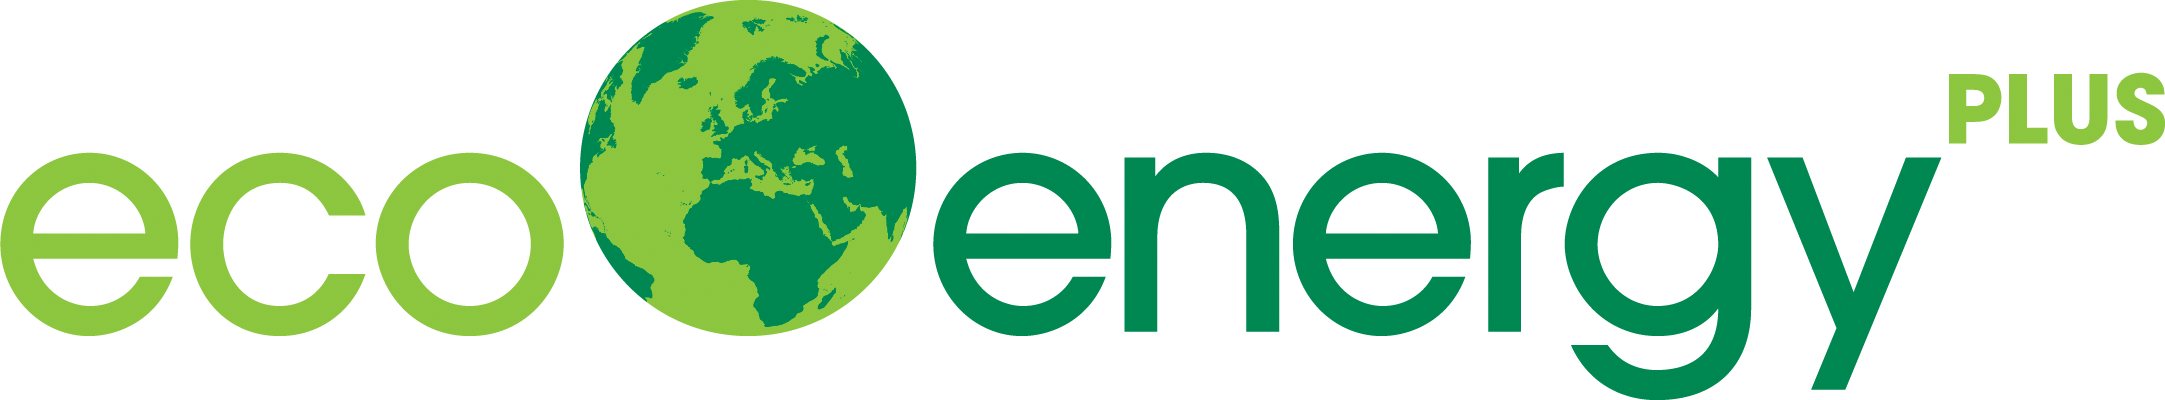 eco-energy-logo - Contrast Ltd